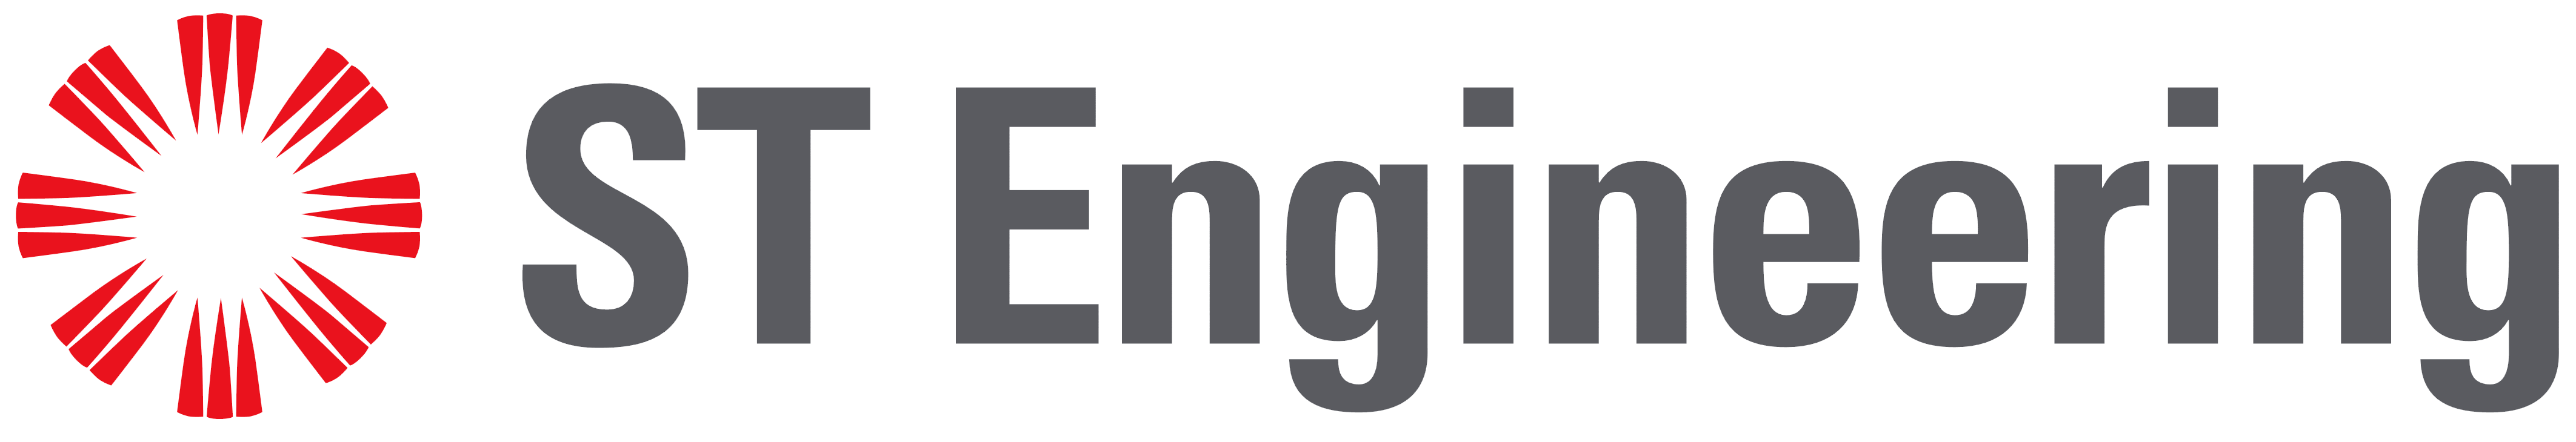 ST Engineering logo, logotype